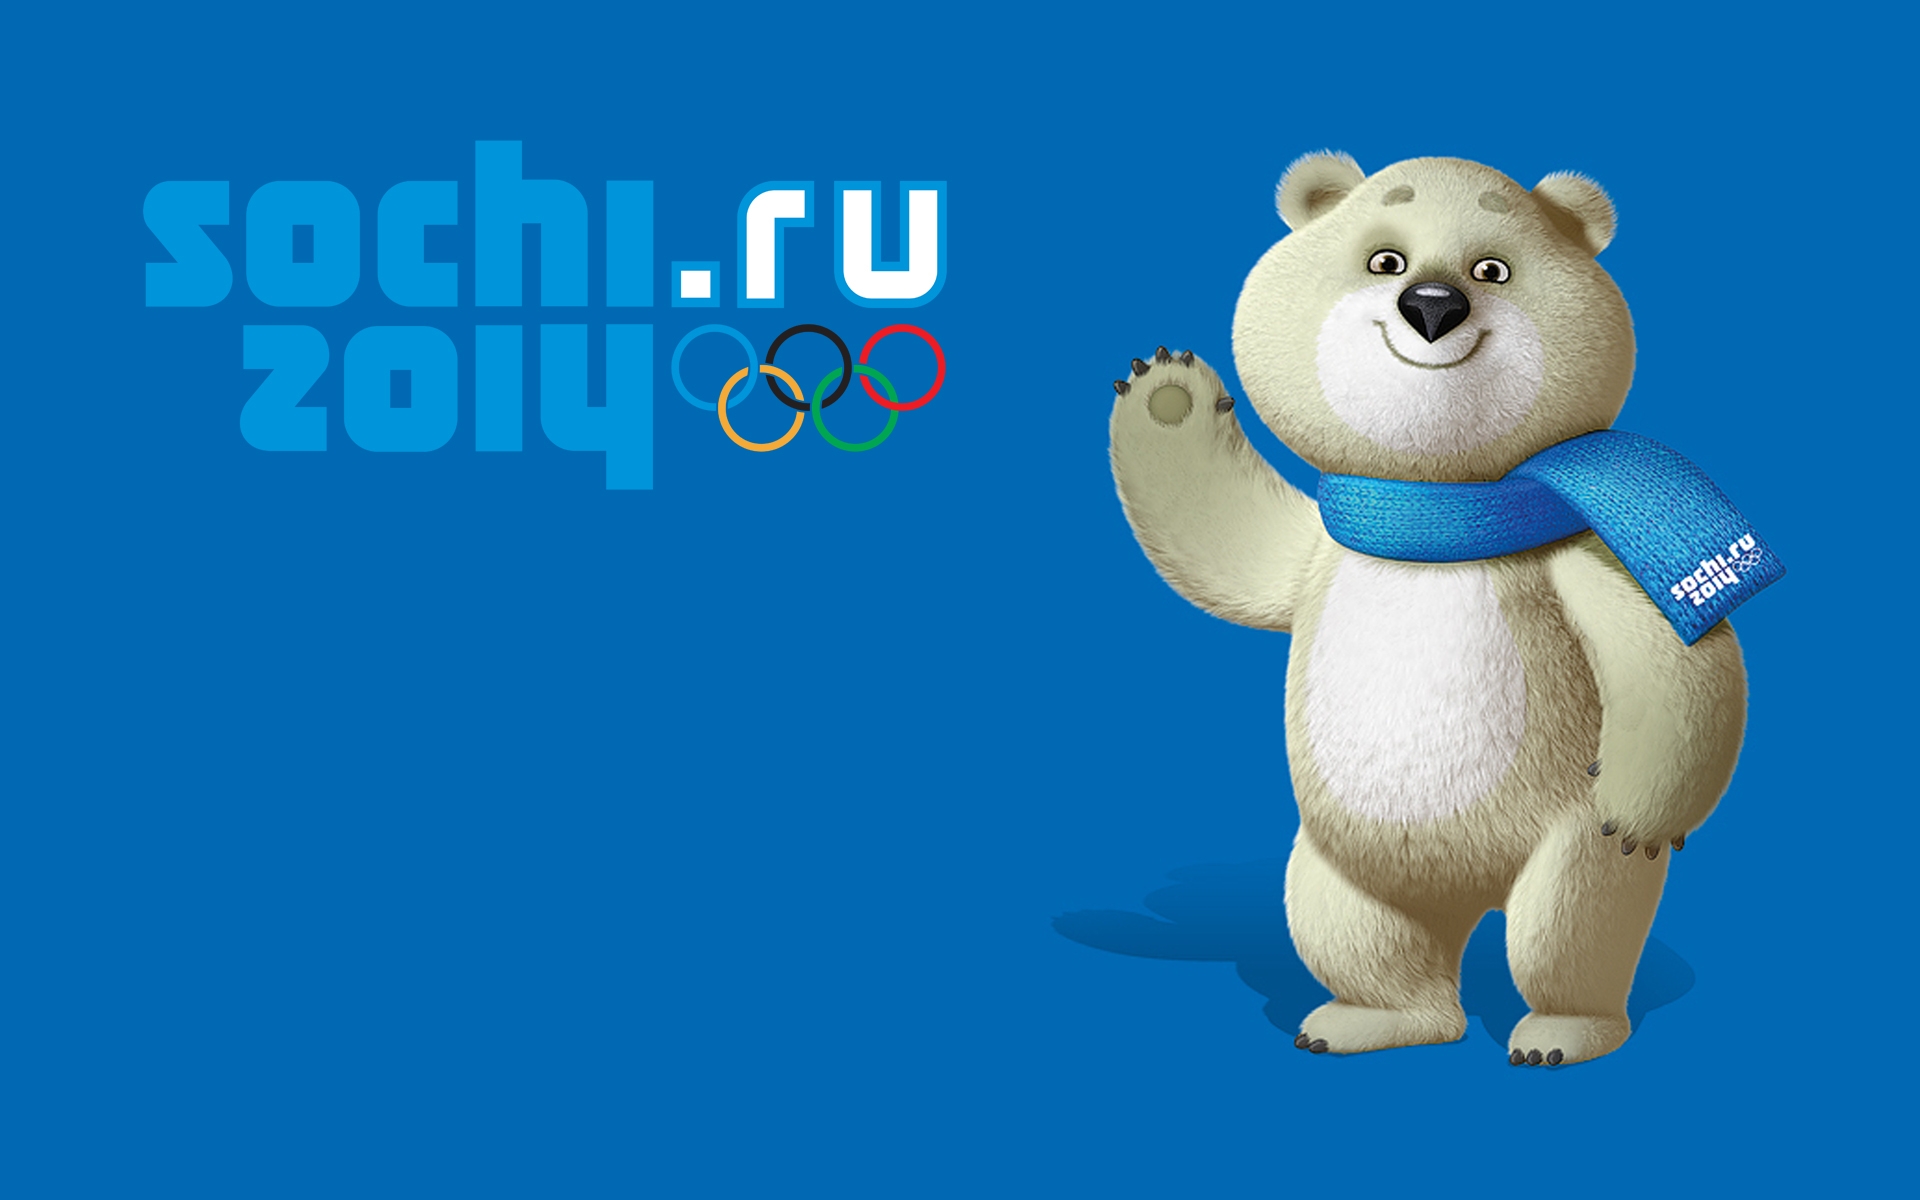 Файл олимпиады. Талисманы Олимпийских игр в Сочи медведь. Олимпийские игры в Сочи 2014 белый мишка. Символ олимпиады в Сочи медведь. Олимпийский мишка Сочи 2014 символ.